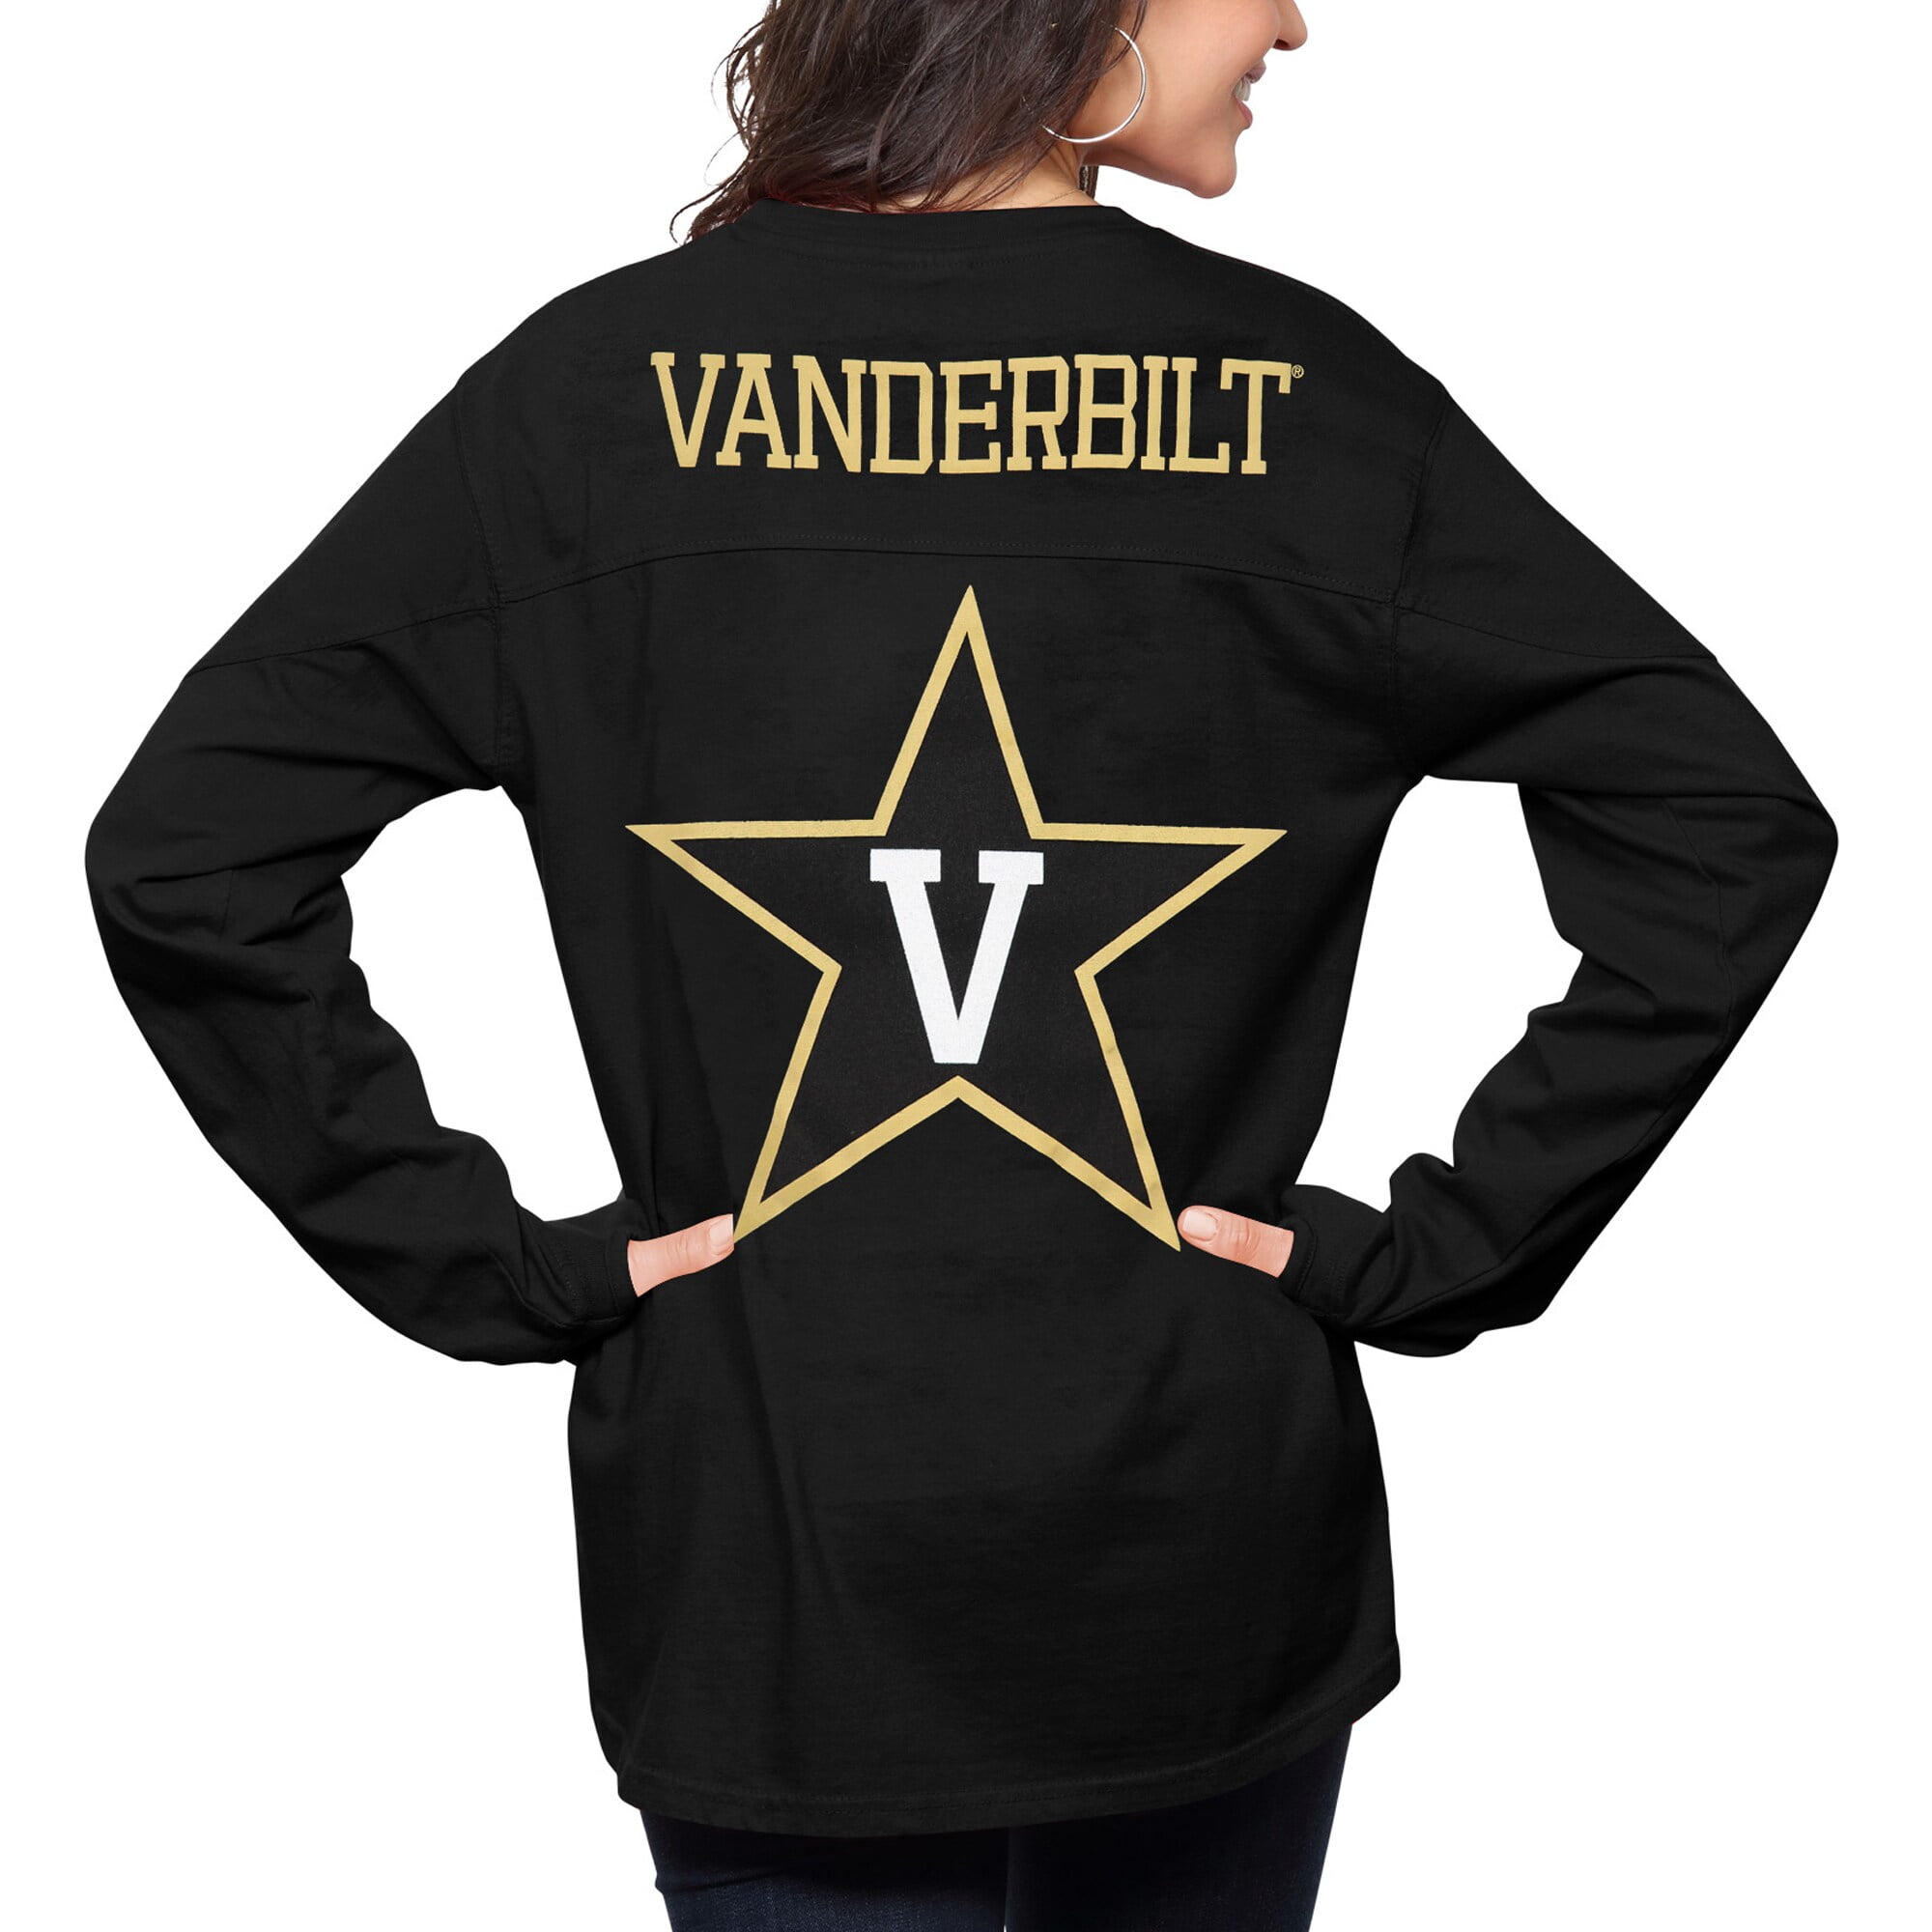 Vanderbilt Commodores Gear, Vanderbilt Commodores Jerseys, Store